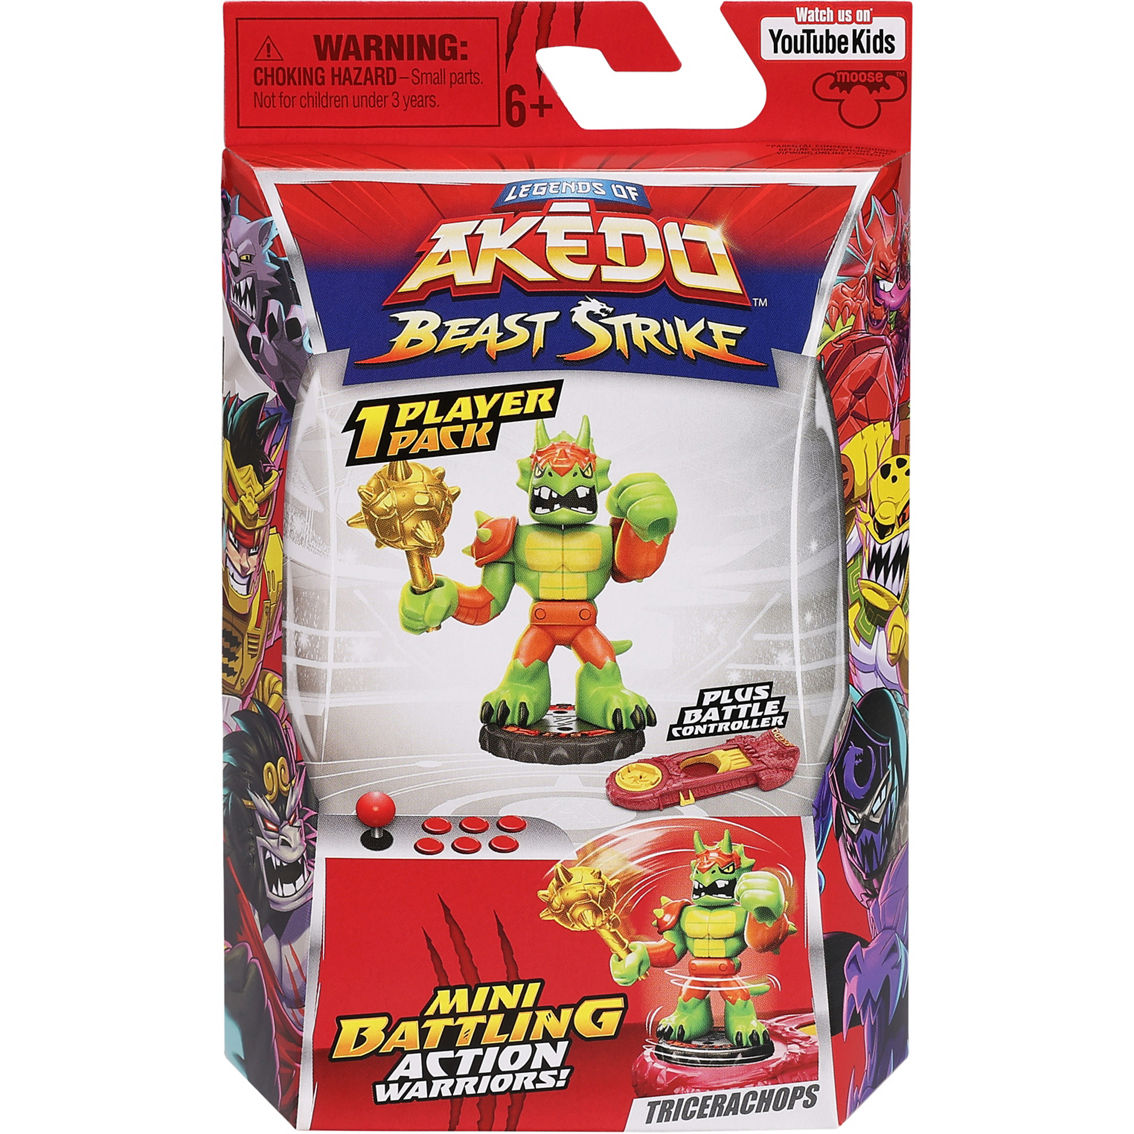 Legends of Akedo Beast Strike Stink King Mini Figure Single Pack - Image 4 of 9